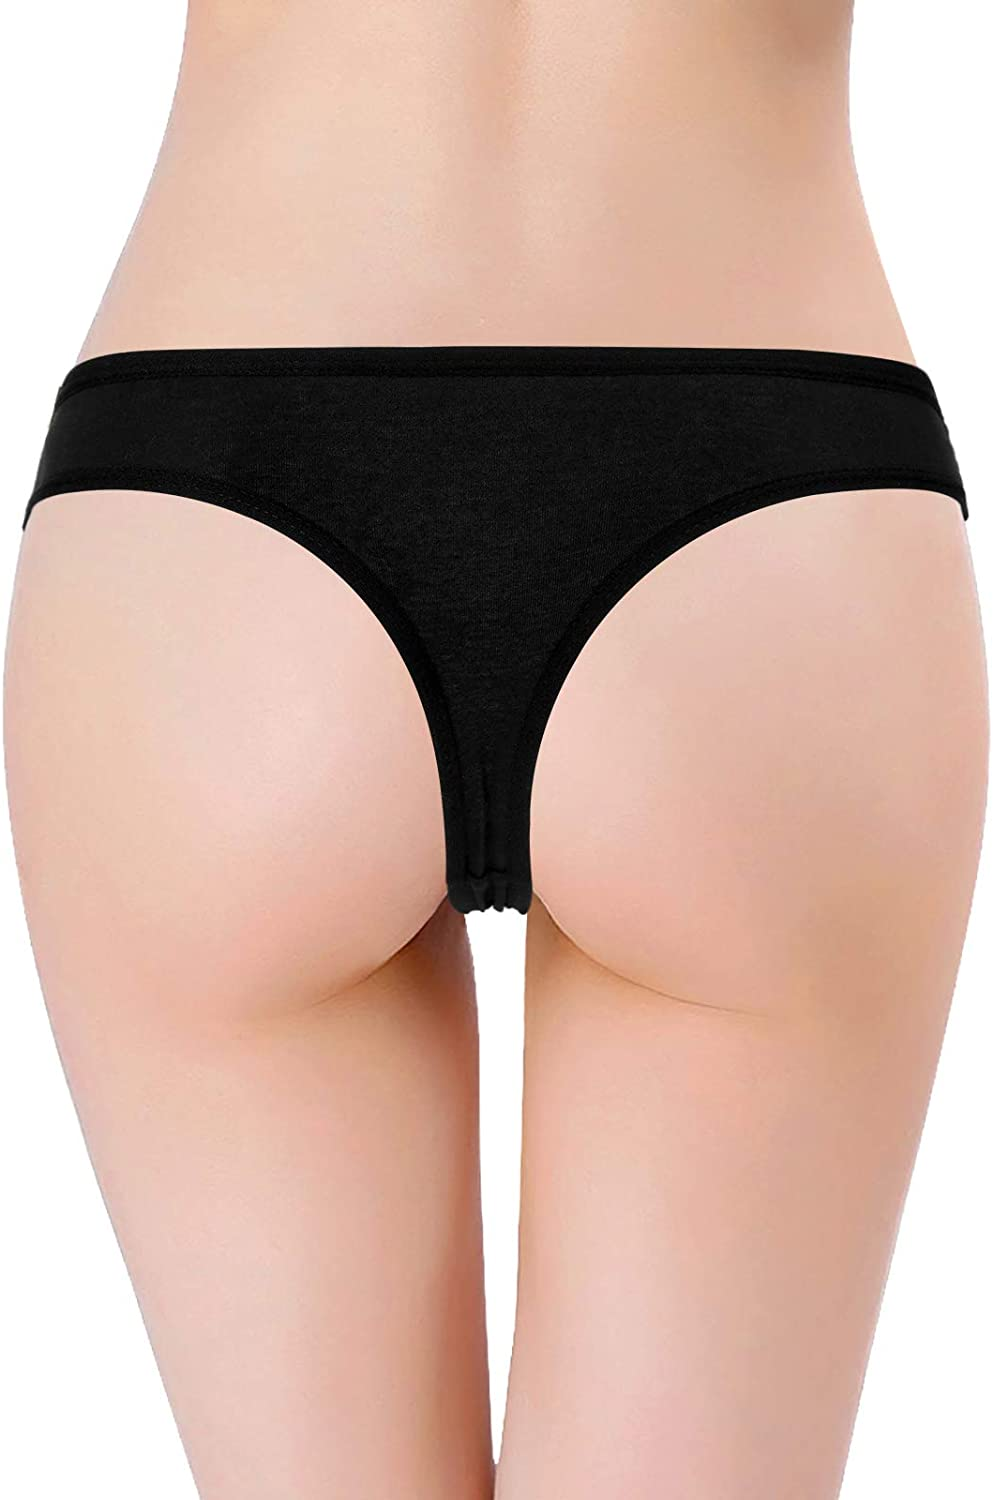 6 Pack Women S Cotton Thongs Breathable Bikini Panties Underwear